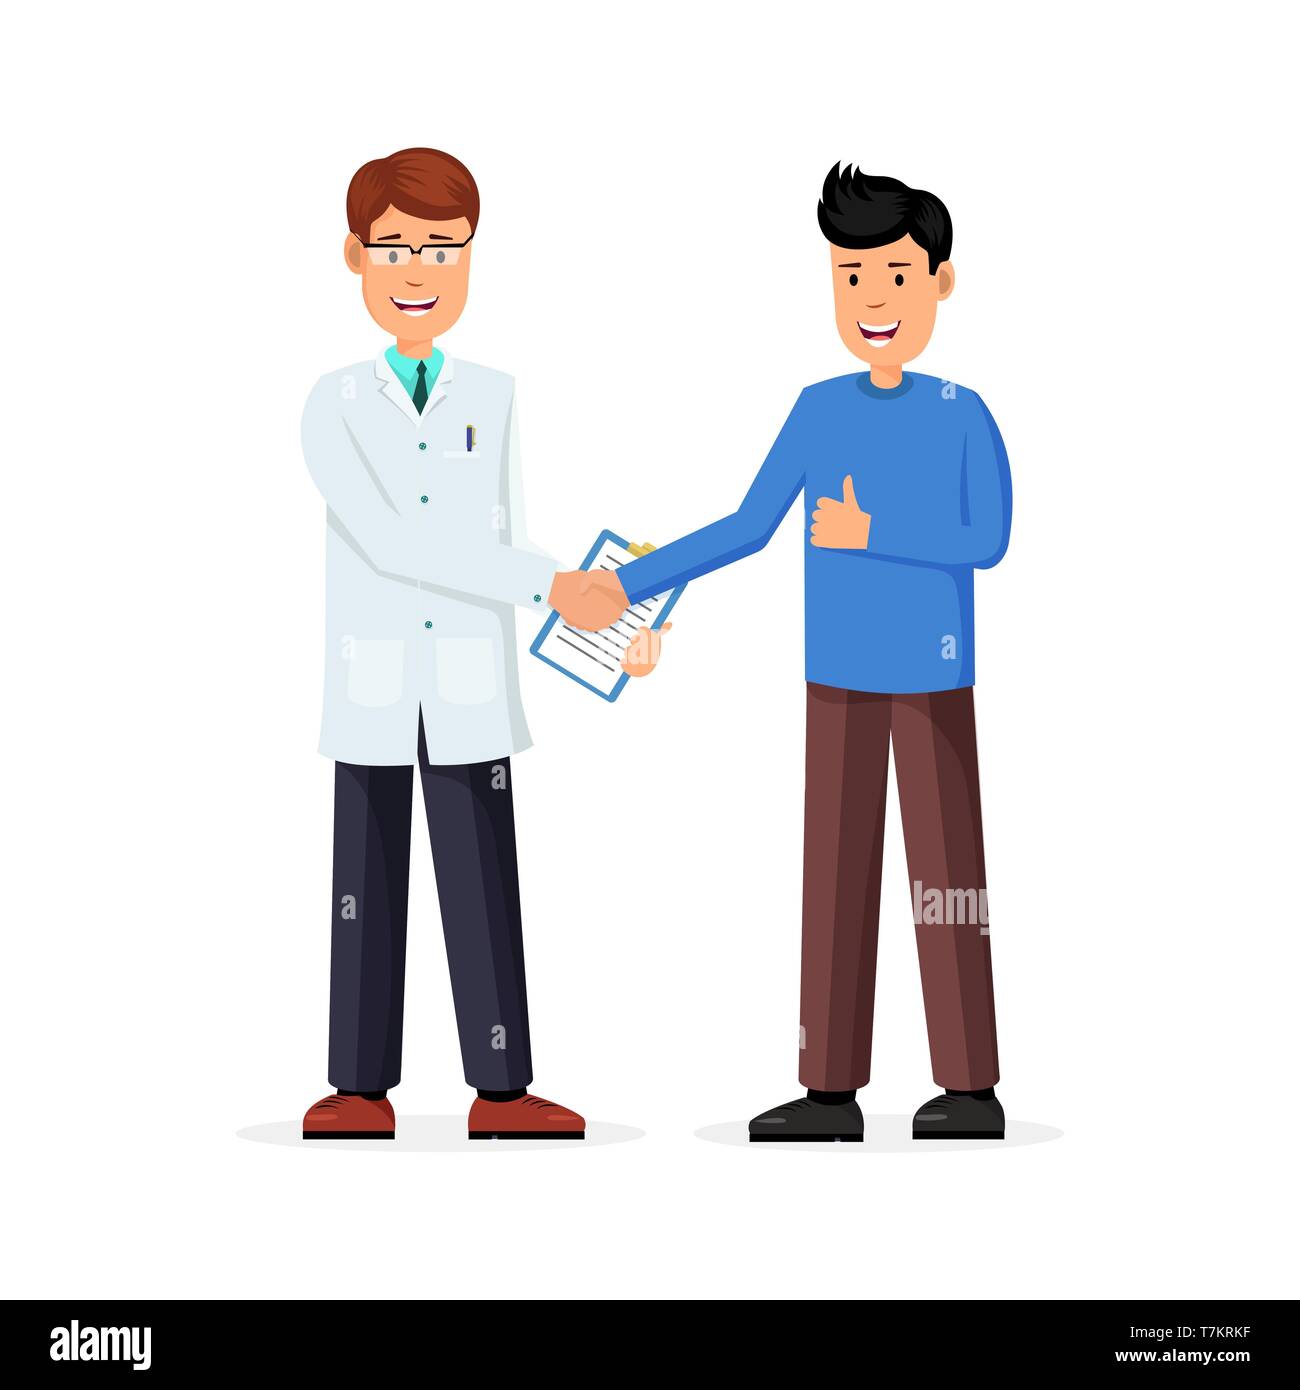 Вежливые врачи. Рукопожатие доктор и пациент. Врач пожимает руку пациенту. Врач жмет руку пациенту. Рукопожатие больного врача.